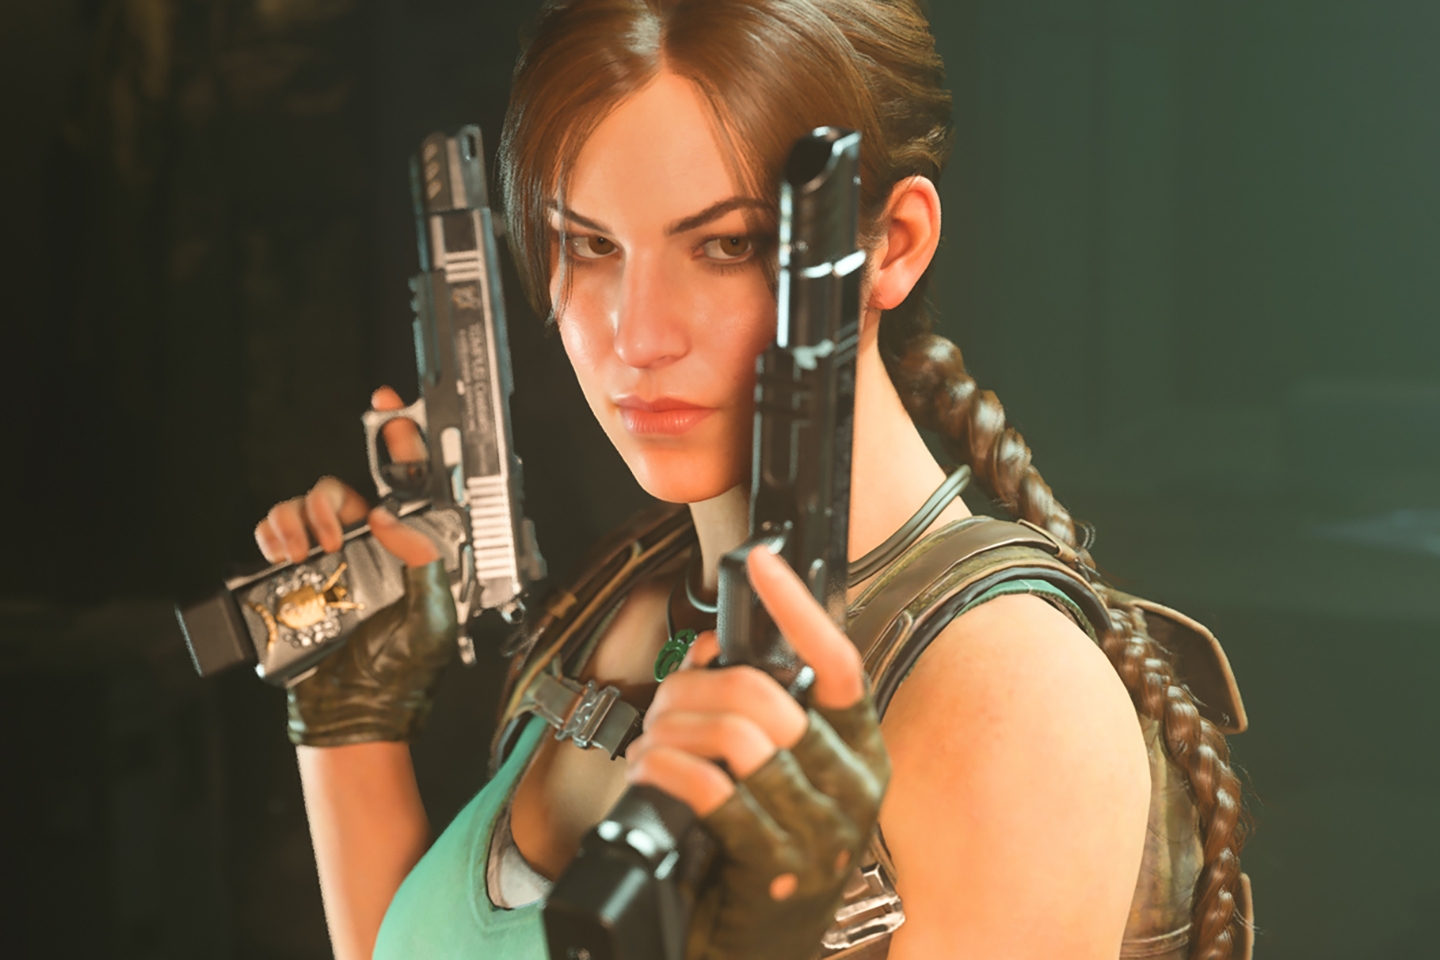 Call of Duty Lara Croft holding her signature dual pistols.